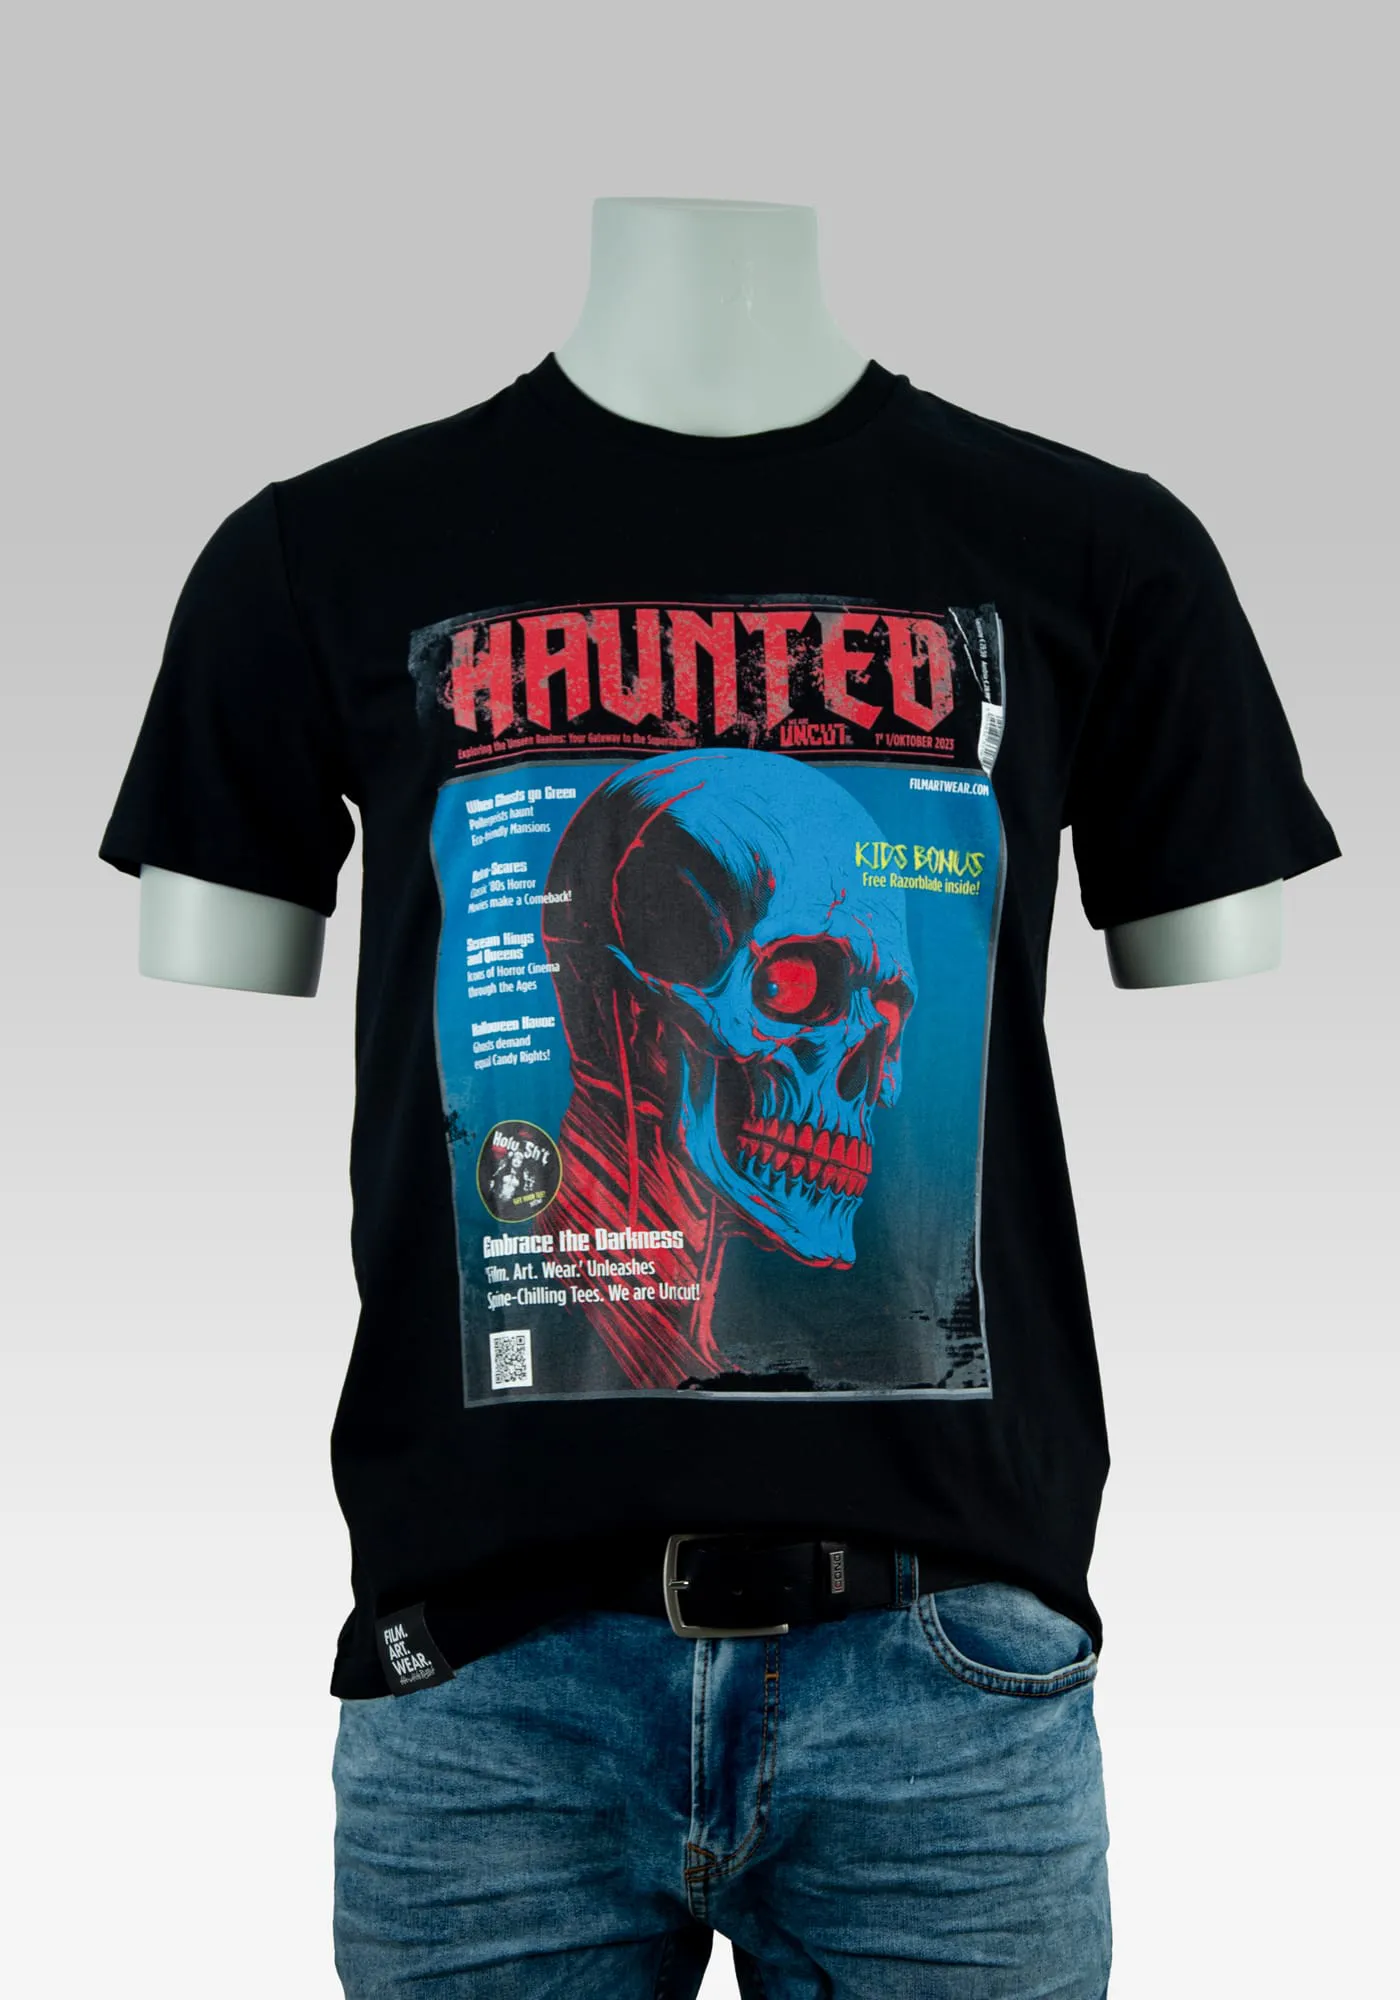 Gruselshirts Haunted Magazin Cover Print auf schwarzem T-Shirt